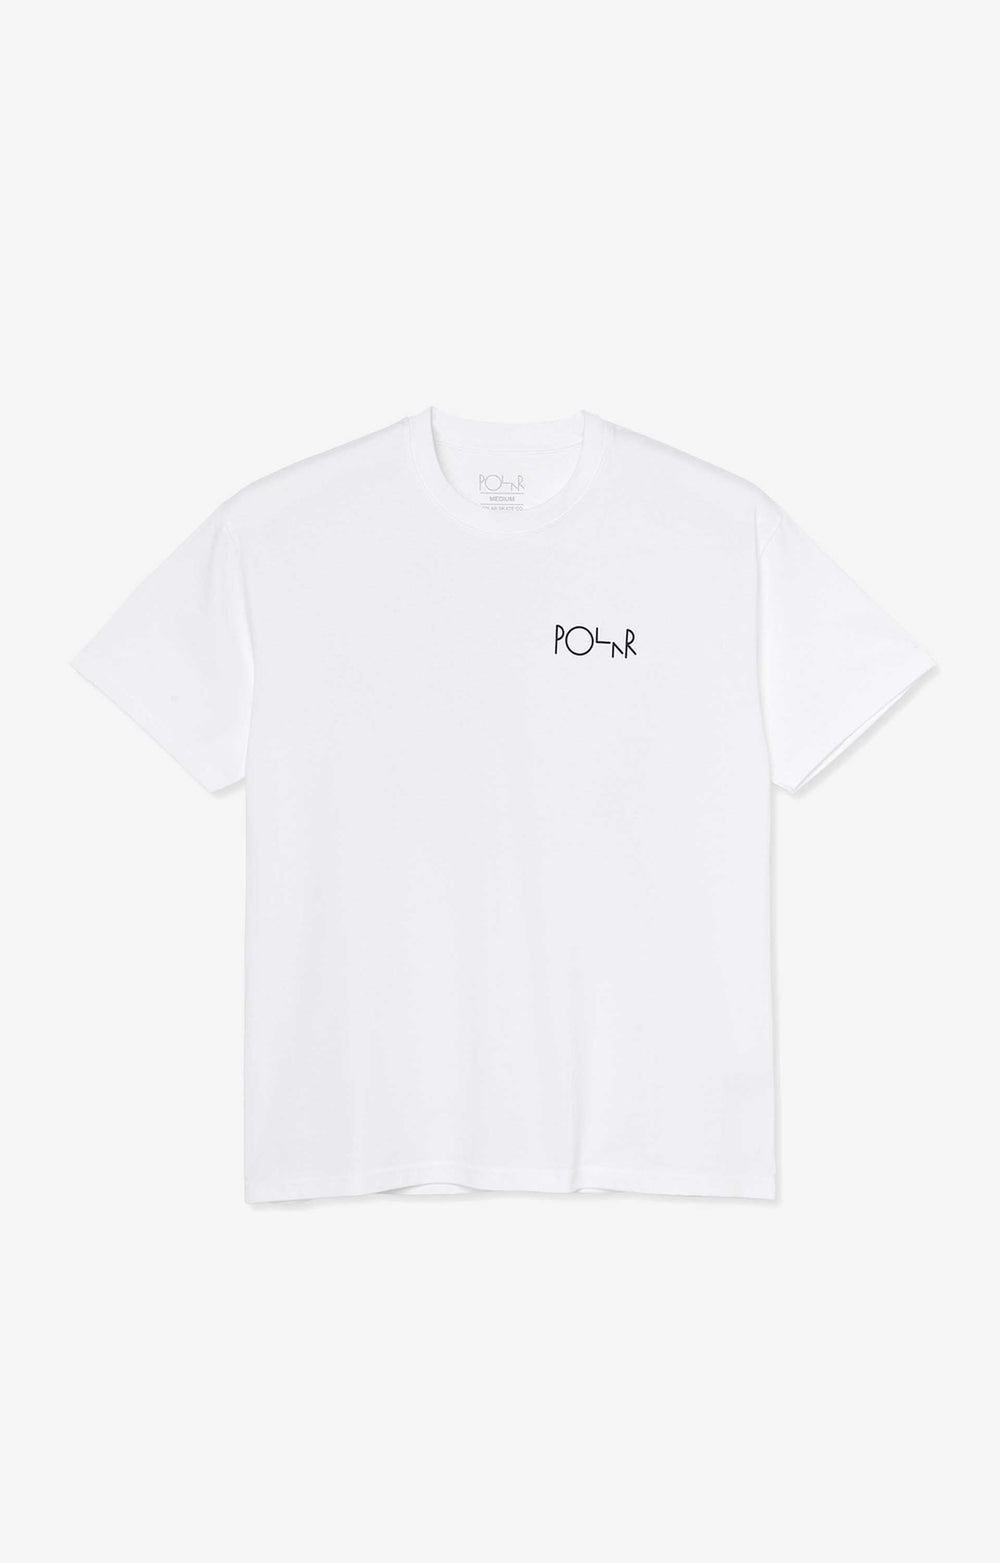 Polar Skate Co Stroke Logo Youth T-Shirt, White